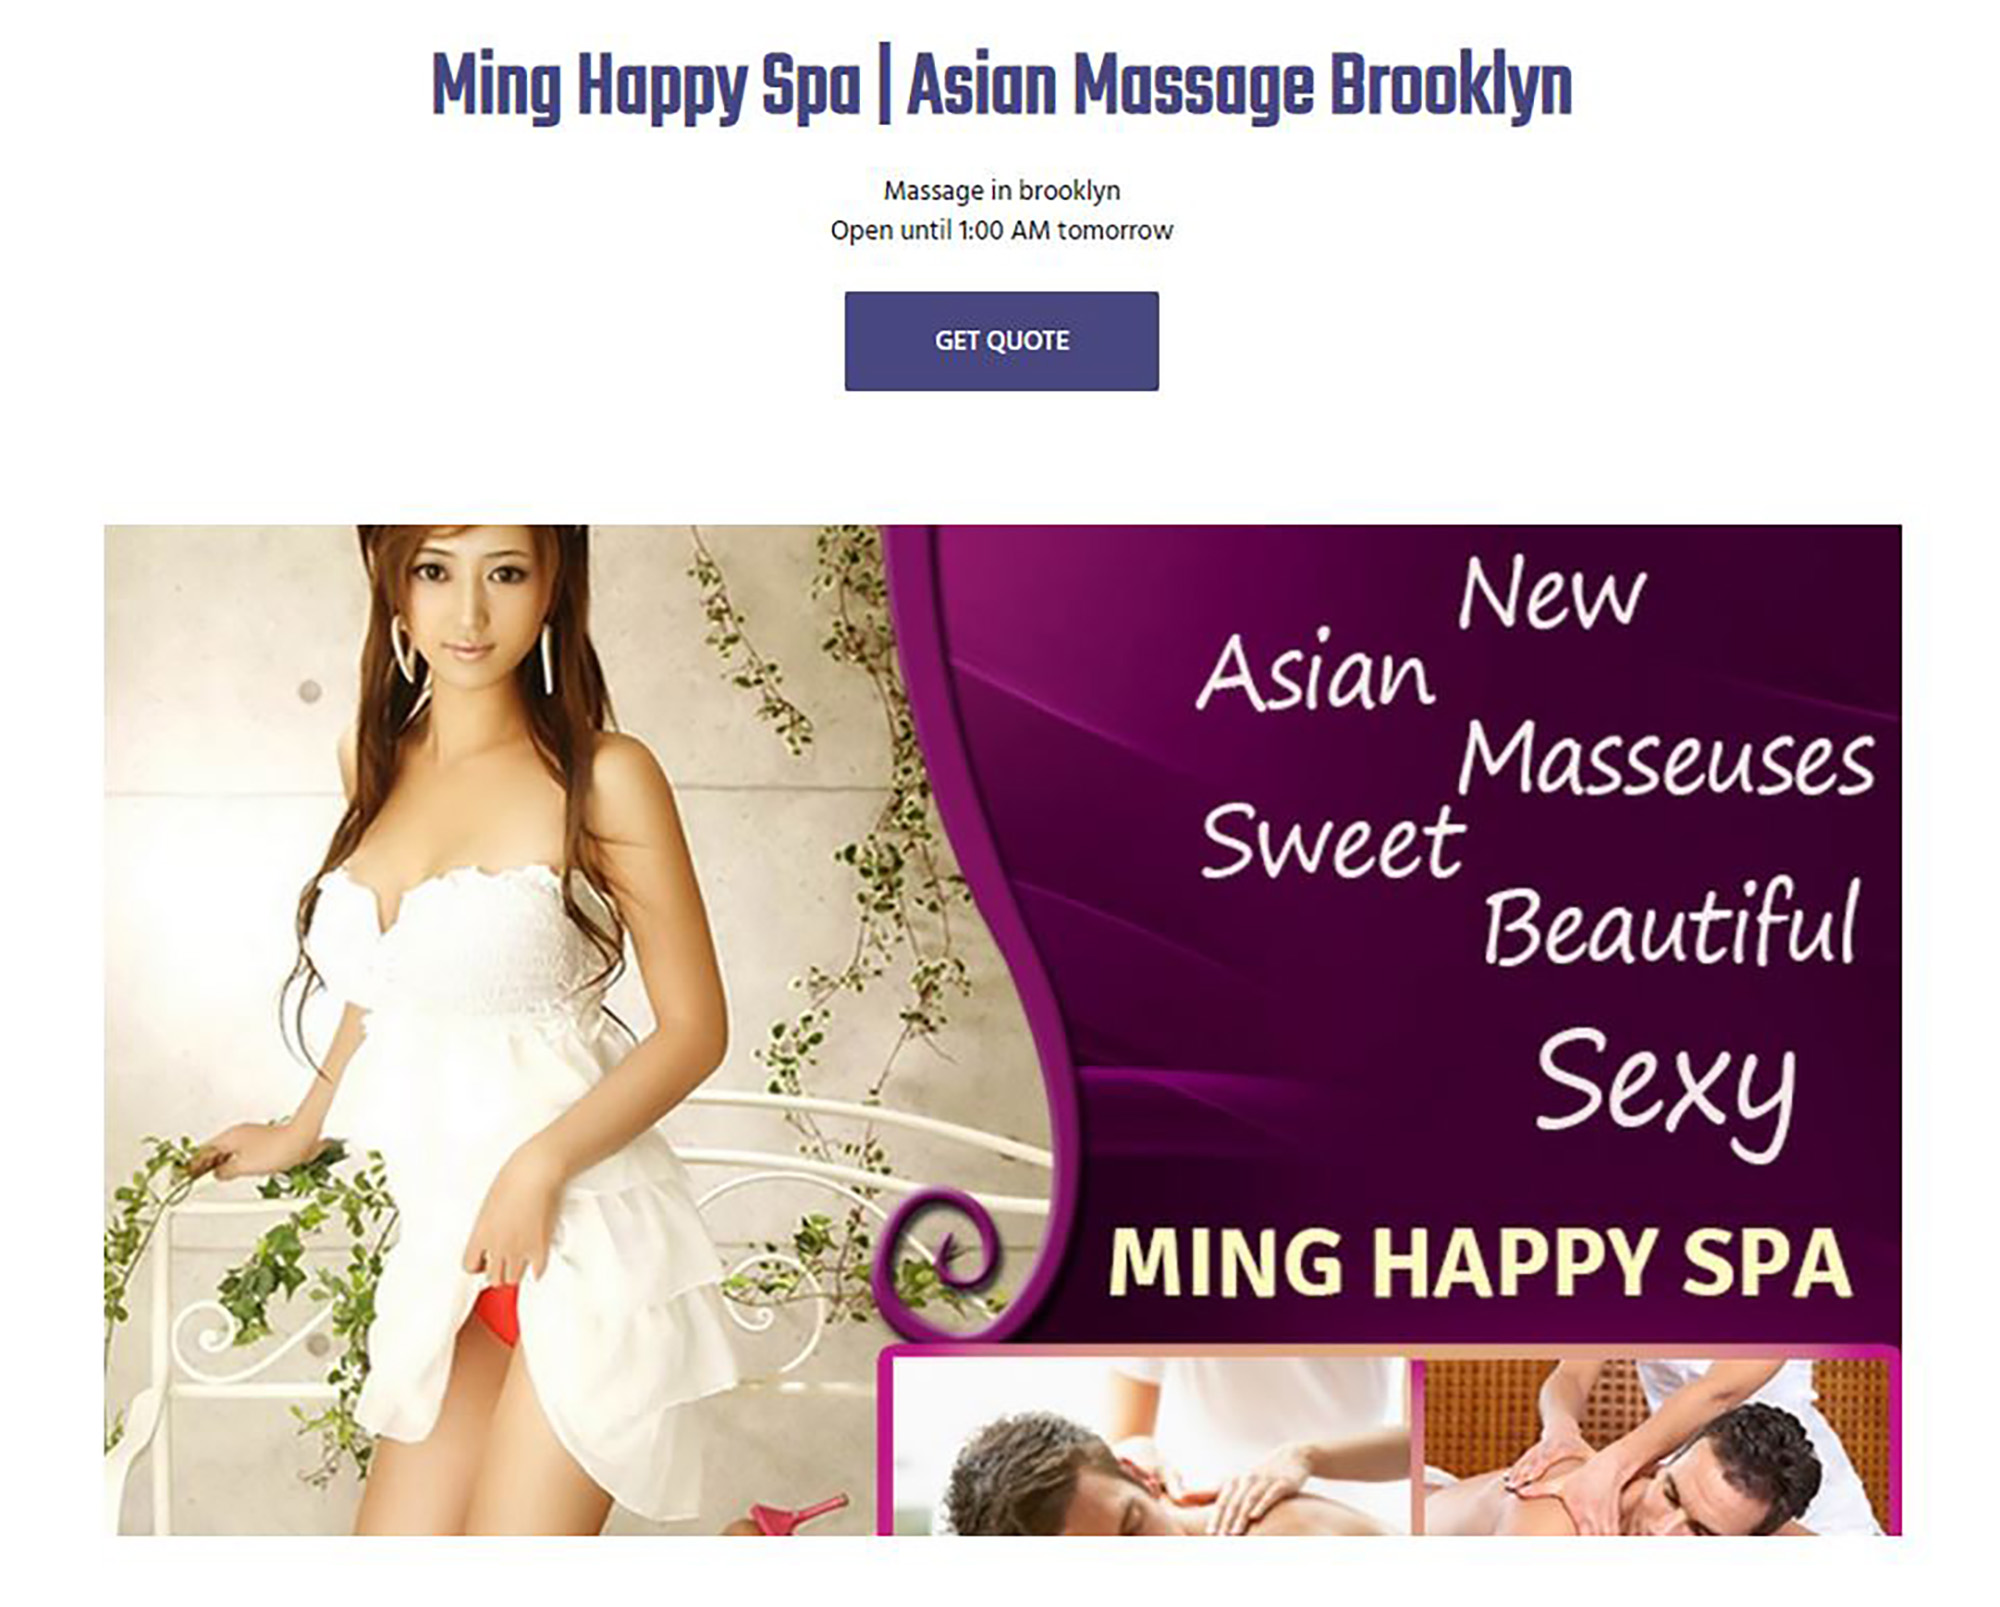 bryan brady recommends hot asian massage near me pic